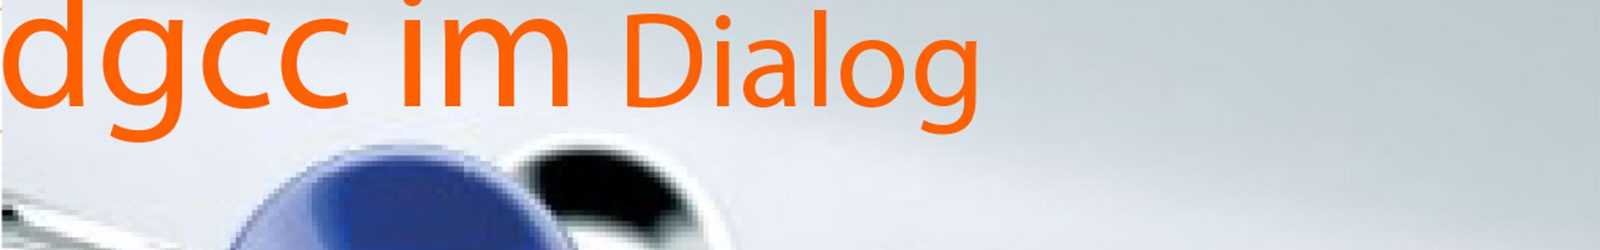 dgcc im Dialog – 07.08.2019 in Köln